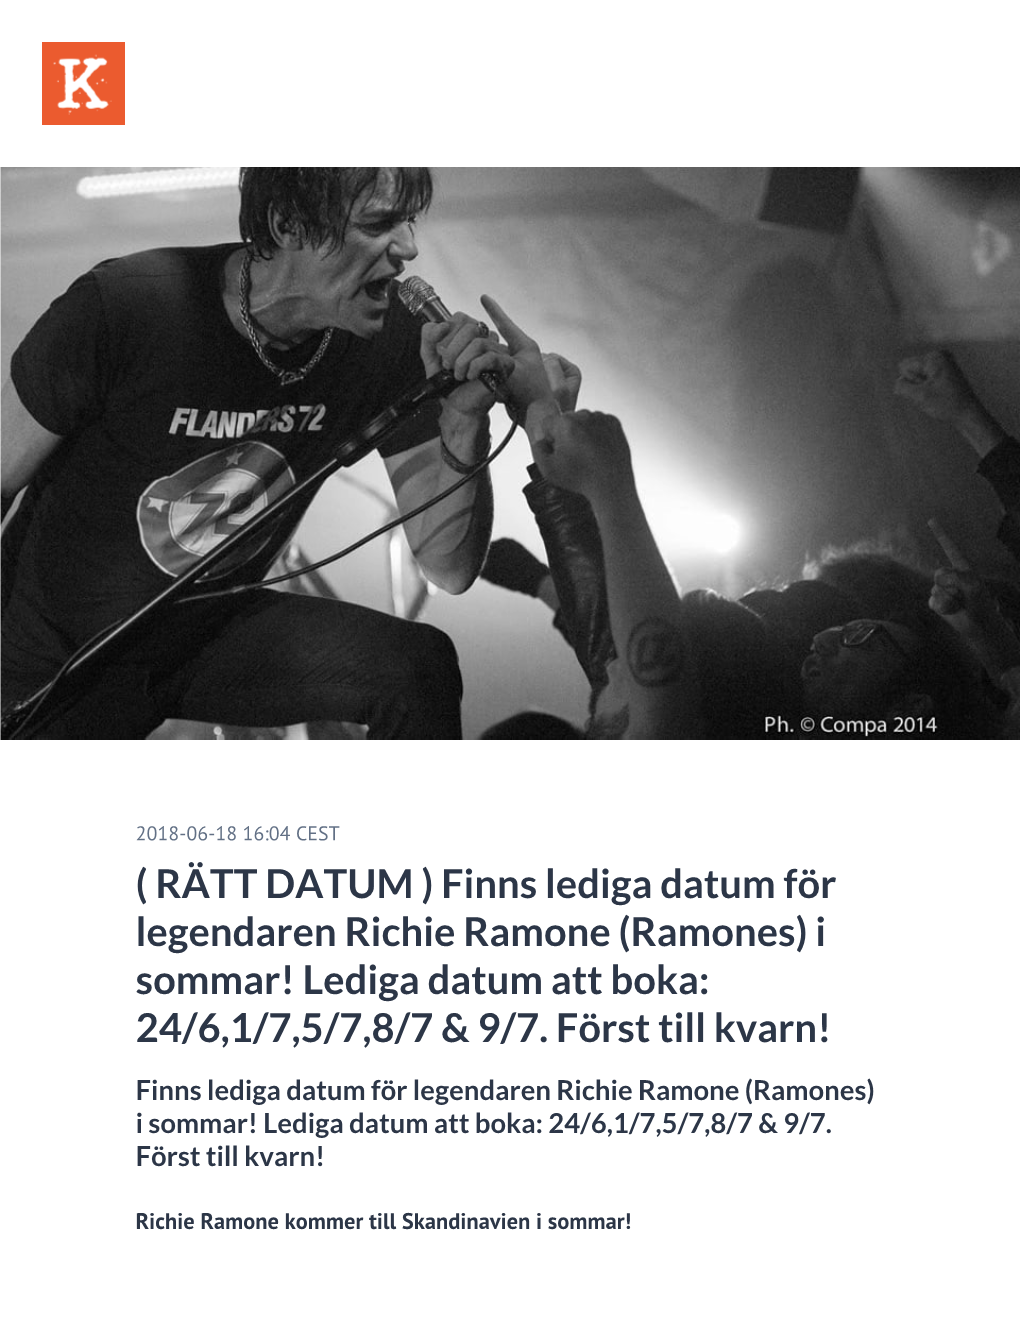 Finns Lediga Datum För Legendaren Richie Ramone (Ramones) I Sommar! Lediga Datum Att Boka: 24/6,1/7,5/7,8/7 & 9/7